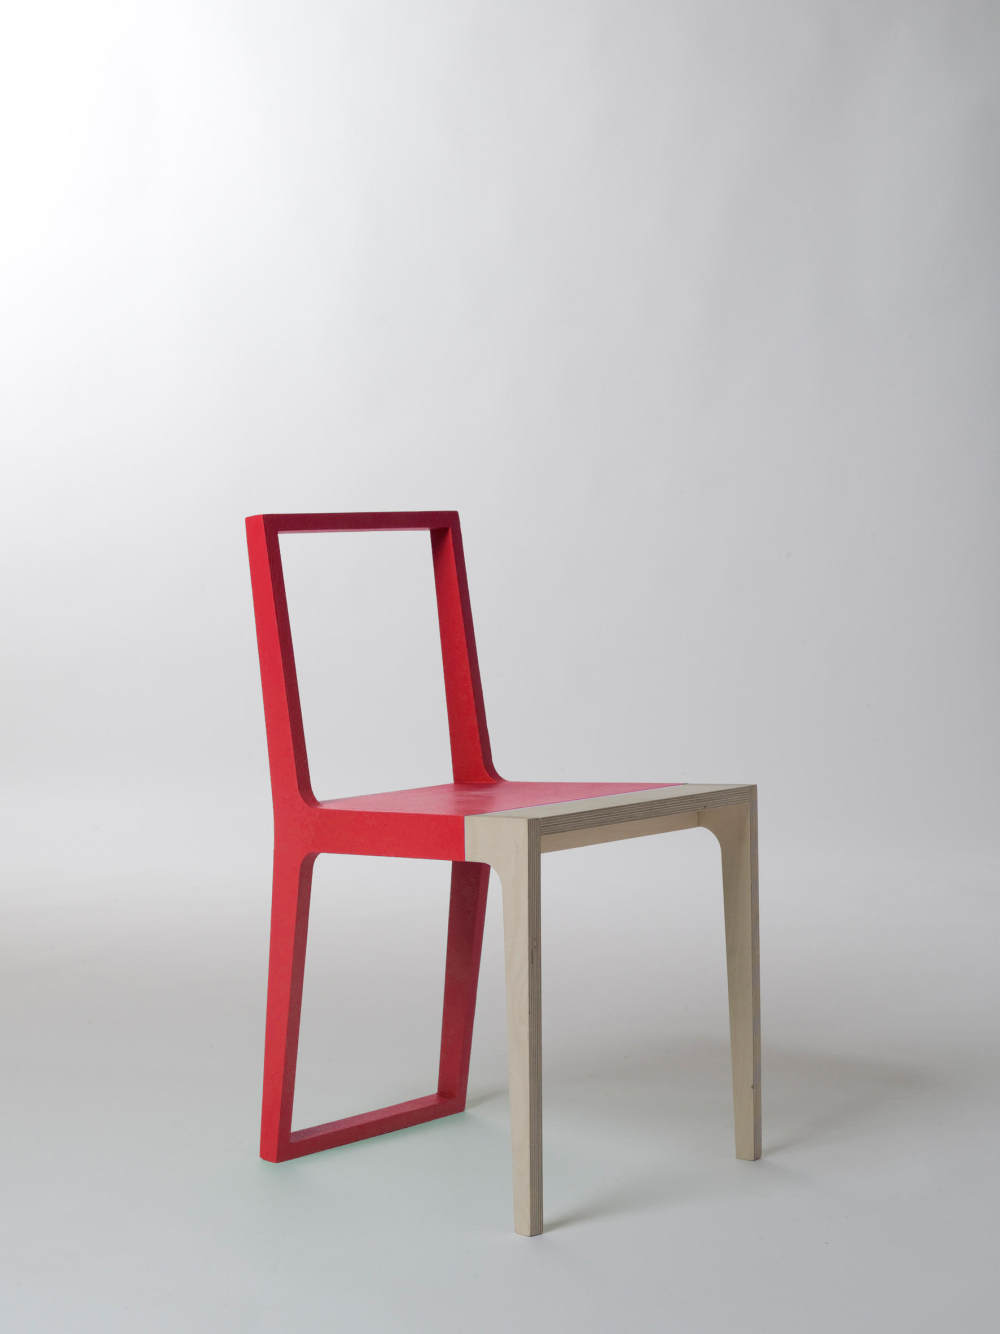 国外现代家具_skin-chair-red-h.jpg